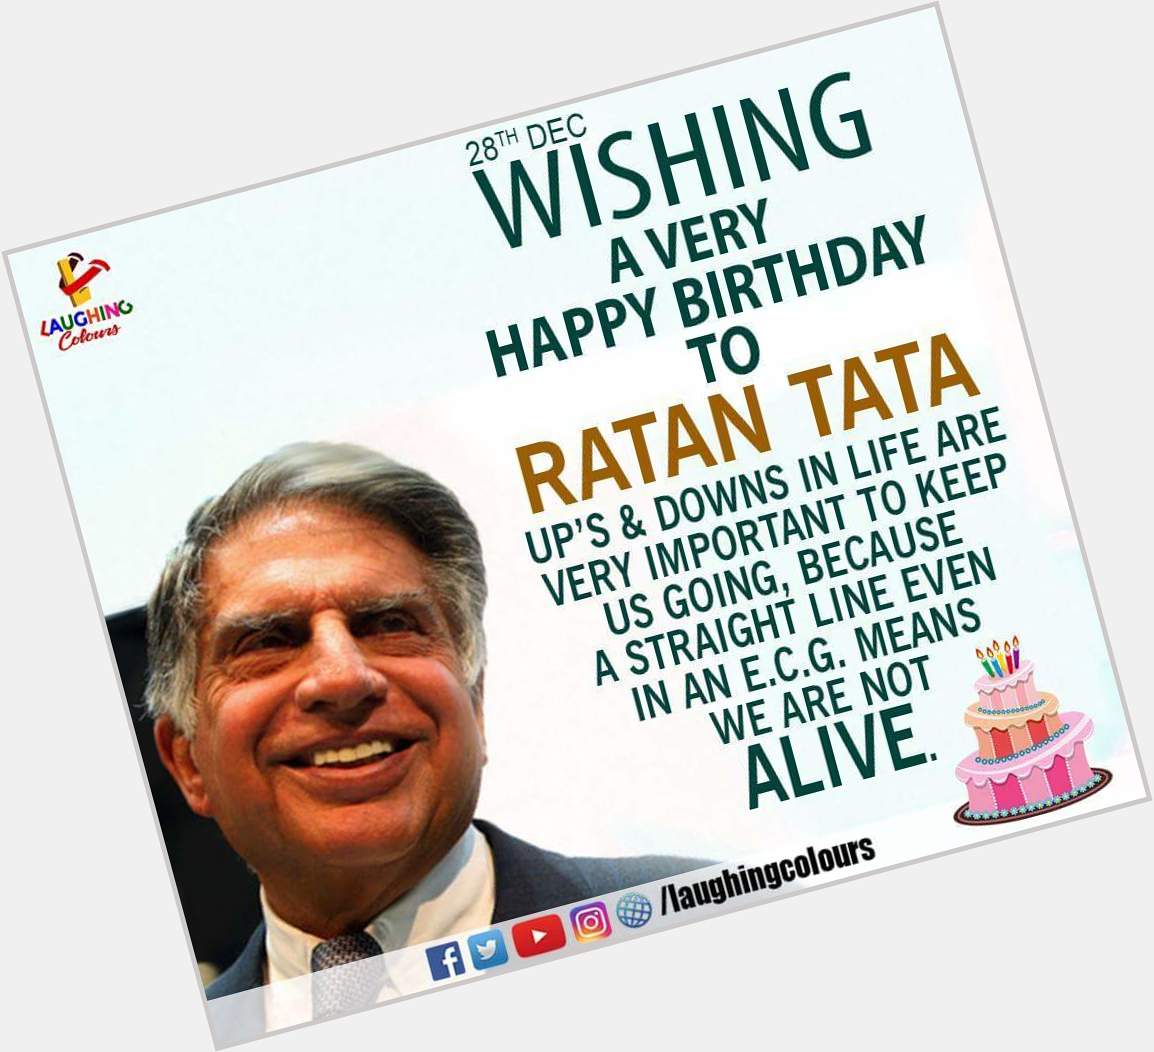 Team laughing colours wishing a very happy birthday to Ratan Tata ji. 